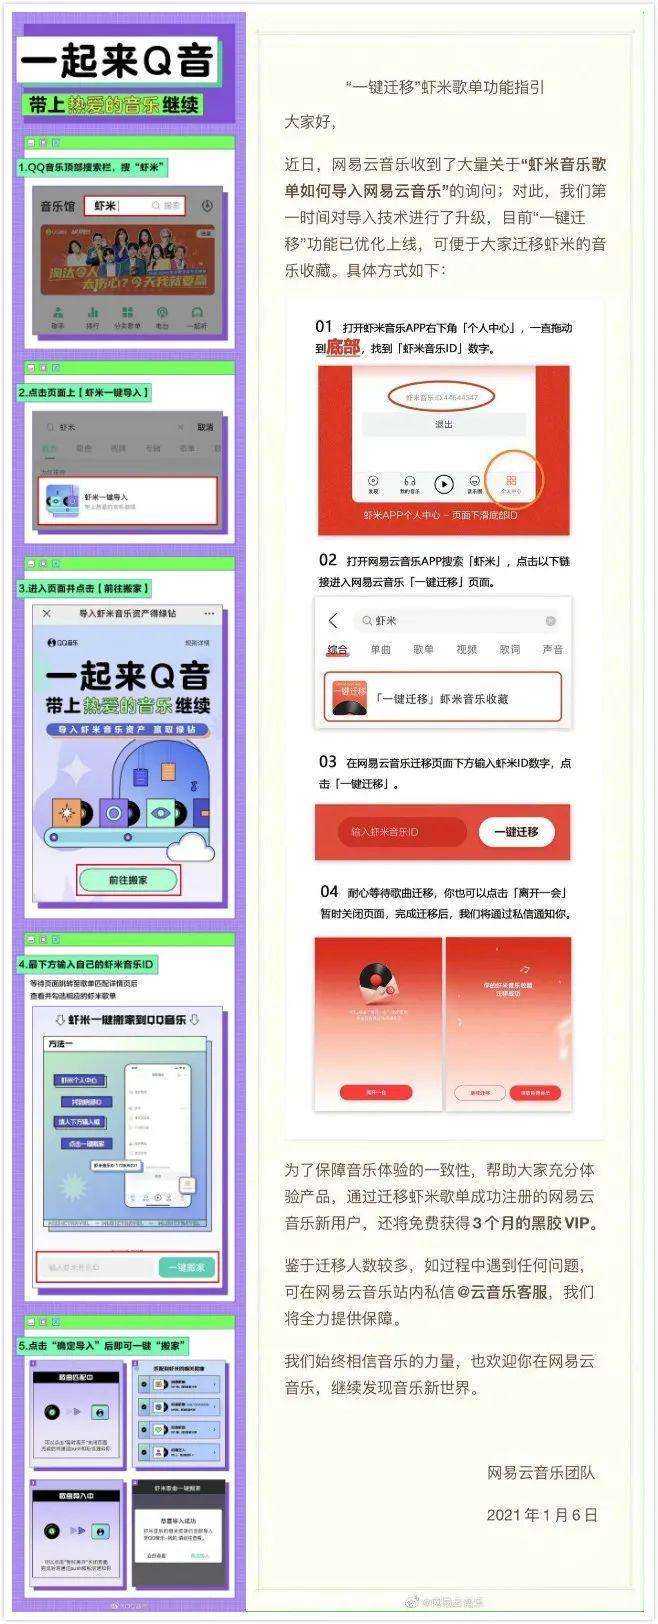 <a href='https://www.zhouxiaohui.cn/duanshipin/
' target='_blank'>小红书</a>内测“圈子”；B站已完成支付域名备案 | 新榜情报-第3张图片-周小辉博客